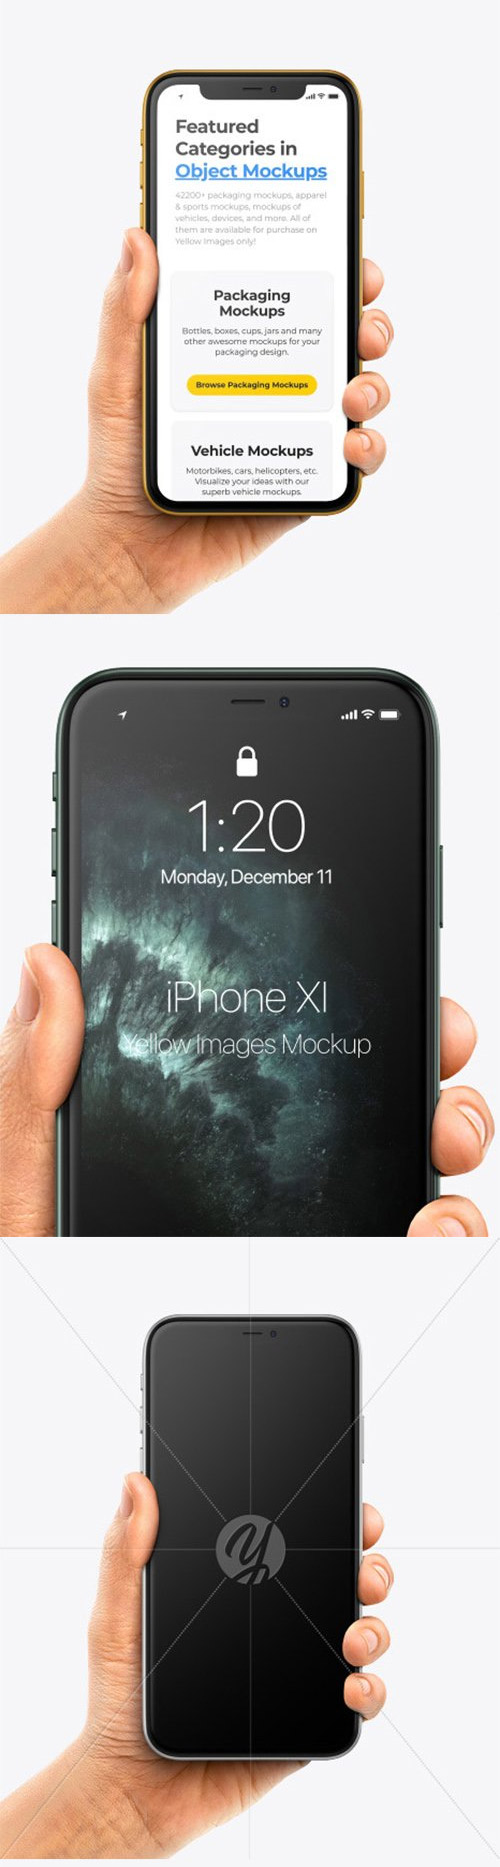 Apple iPhone 11 Pro in Hand Mockup 65930